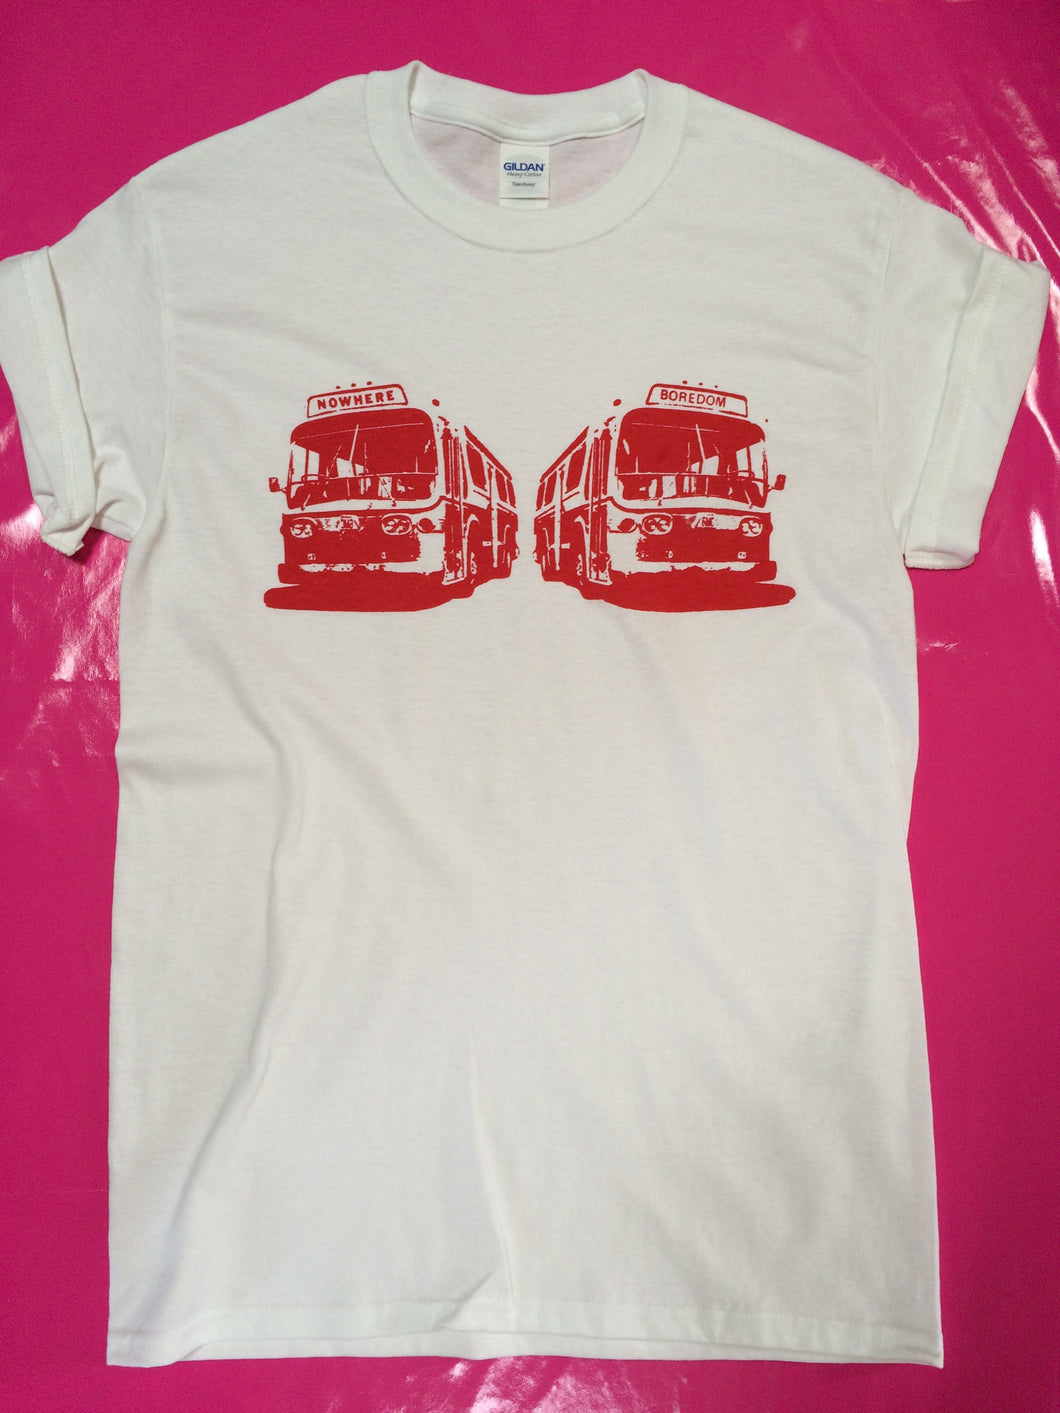 Sex Pistols - Pretty Vacant / Suburban Press Buses Punk T-Shirt